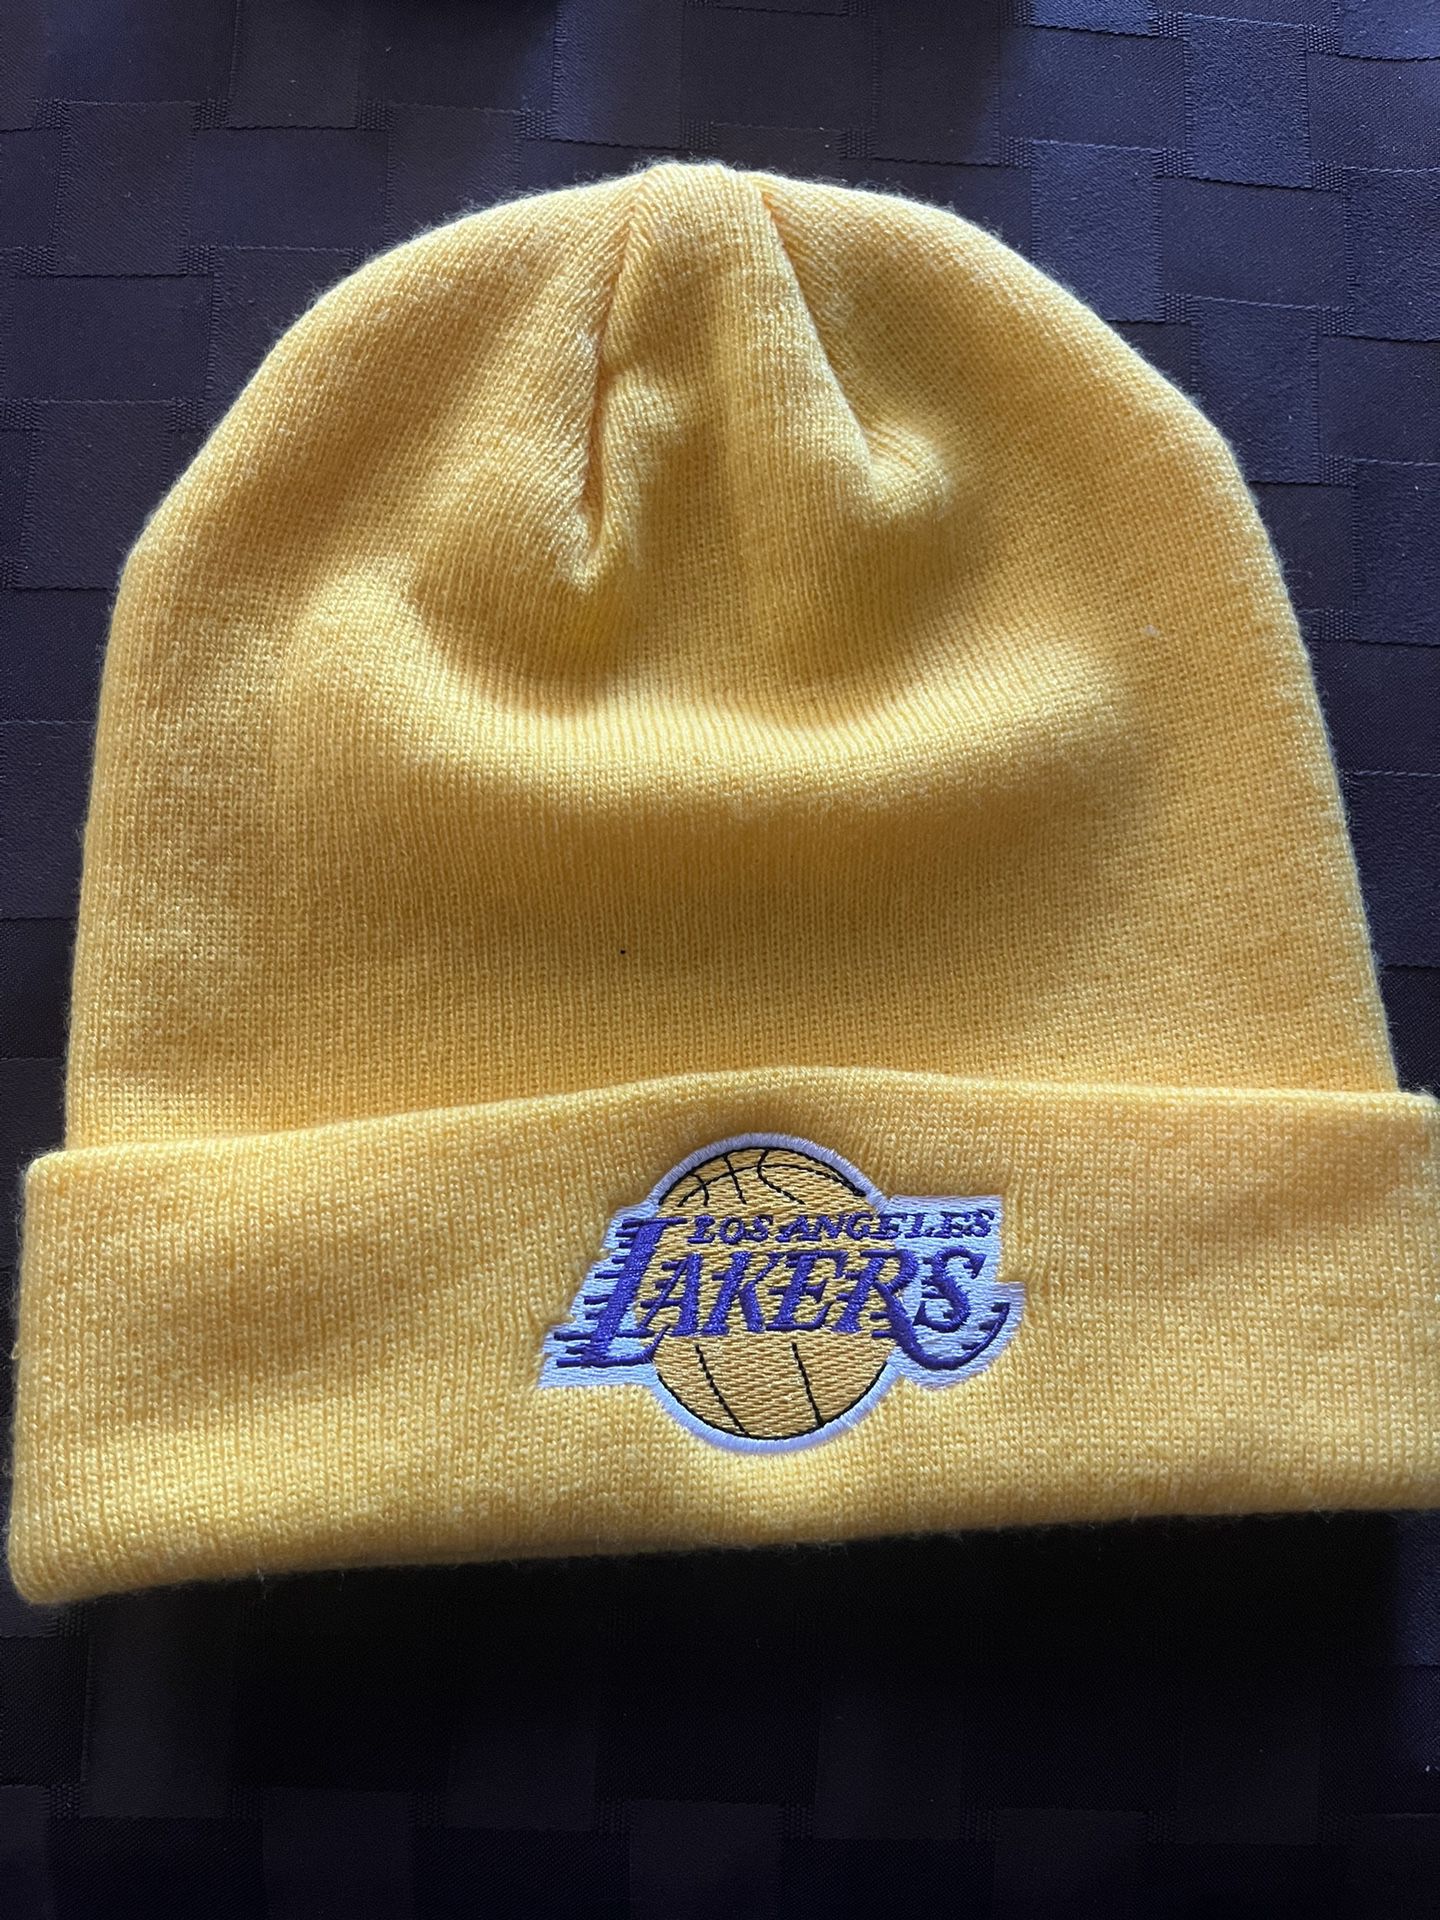 NBA LA Lakers Beanie Los Angeles Basketball Skully Knit Winter Yellow UNK